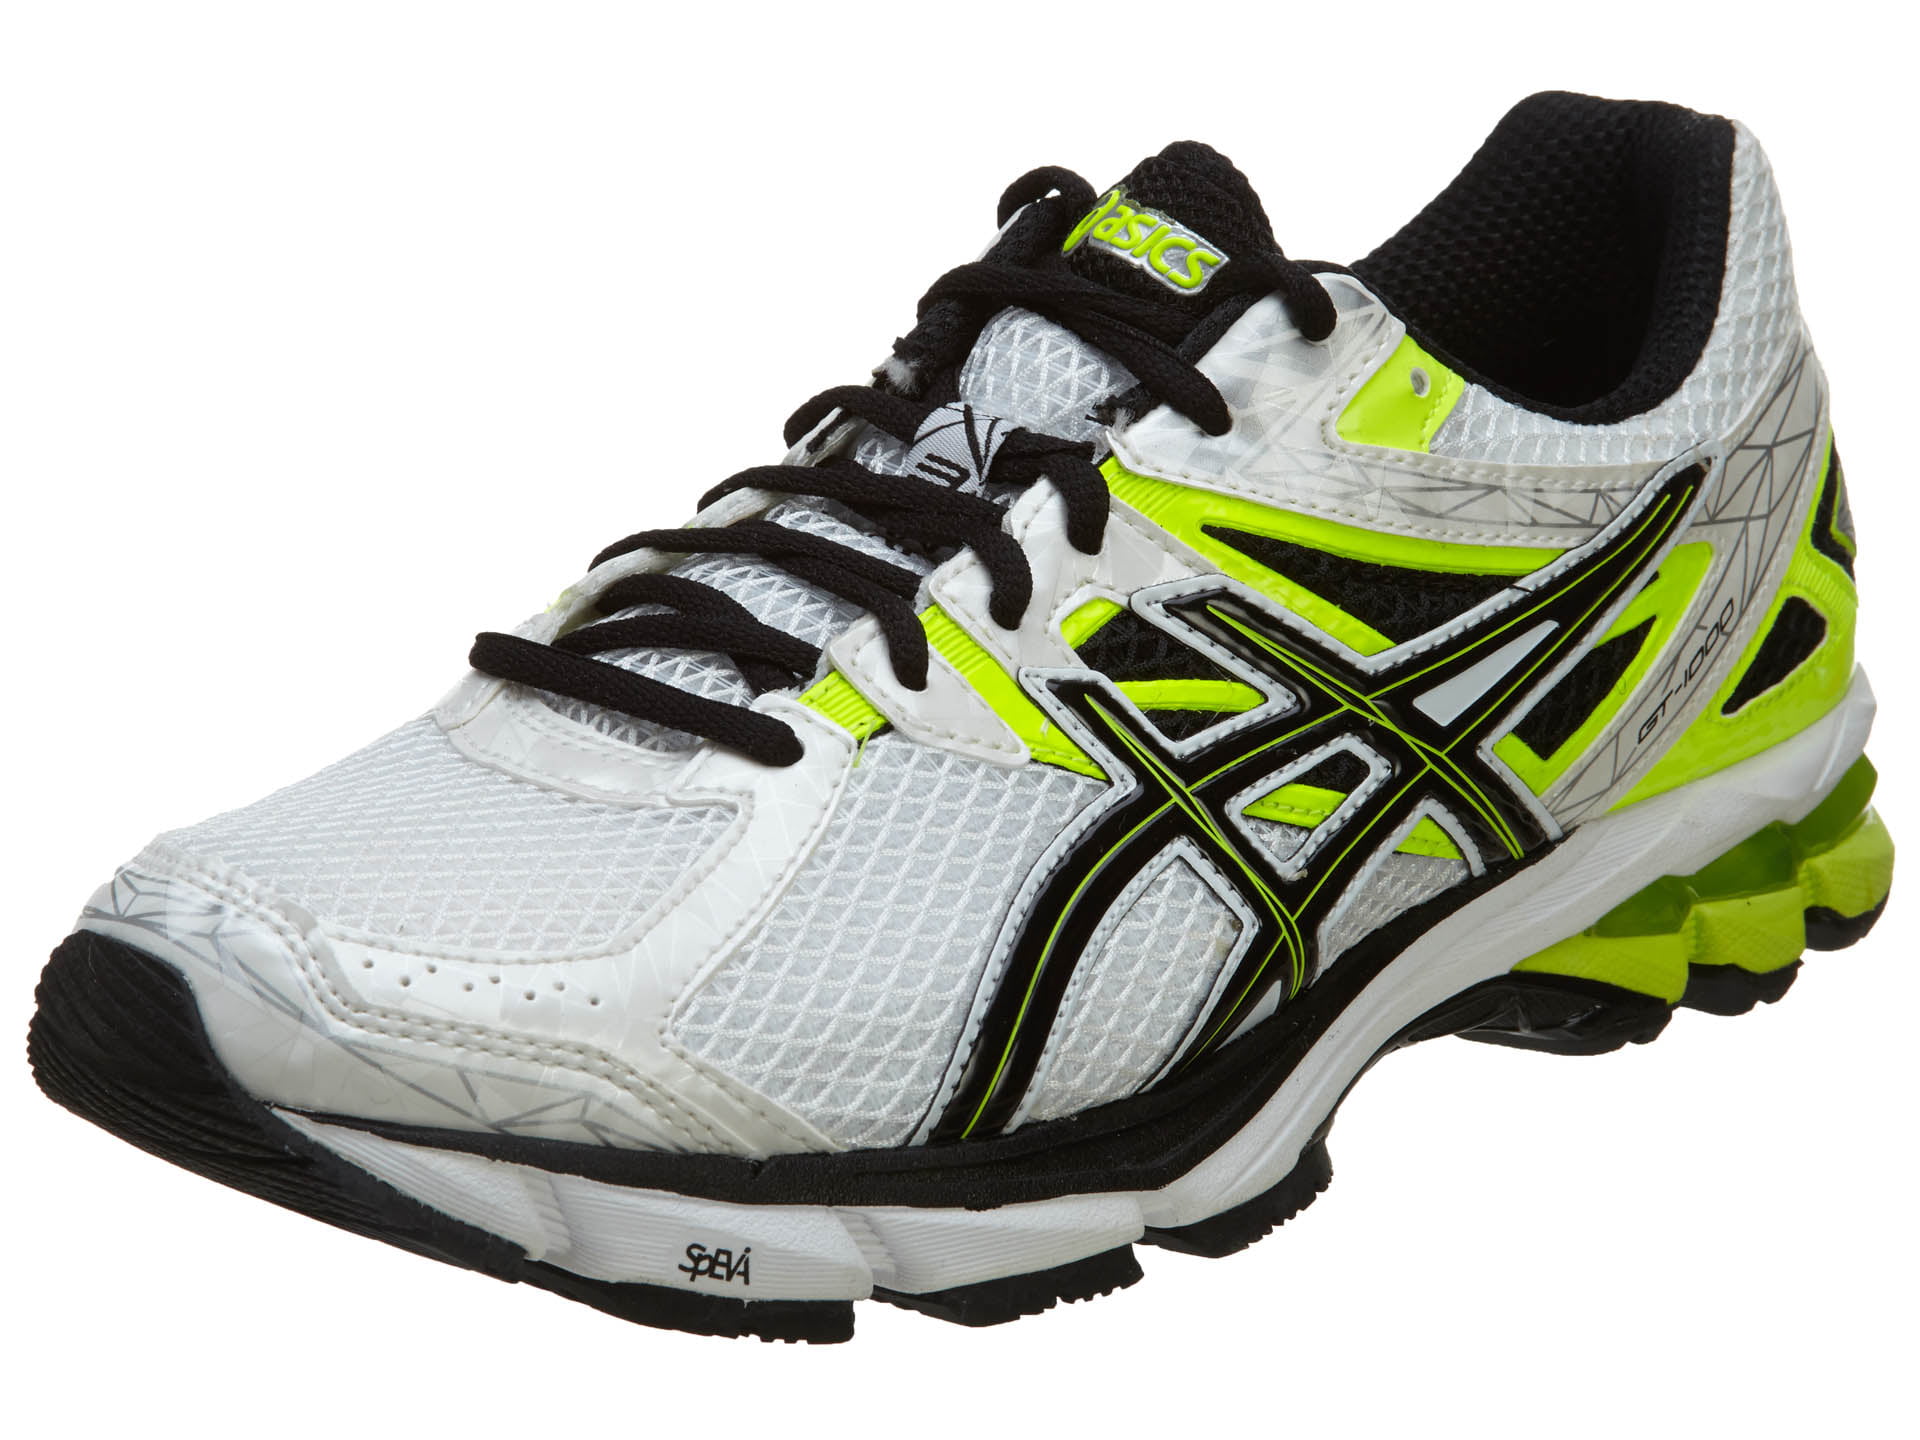 ASICS - Asics 2014 Men's GT-1000 3 Running Shoe - T4K3N.0190  (White/Black/Flash Yellow - 7.5) - Walmart.com - Walmart.com